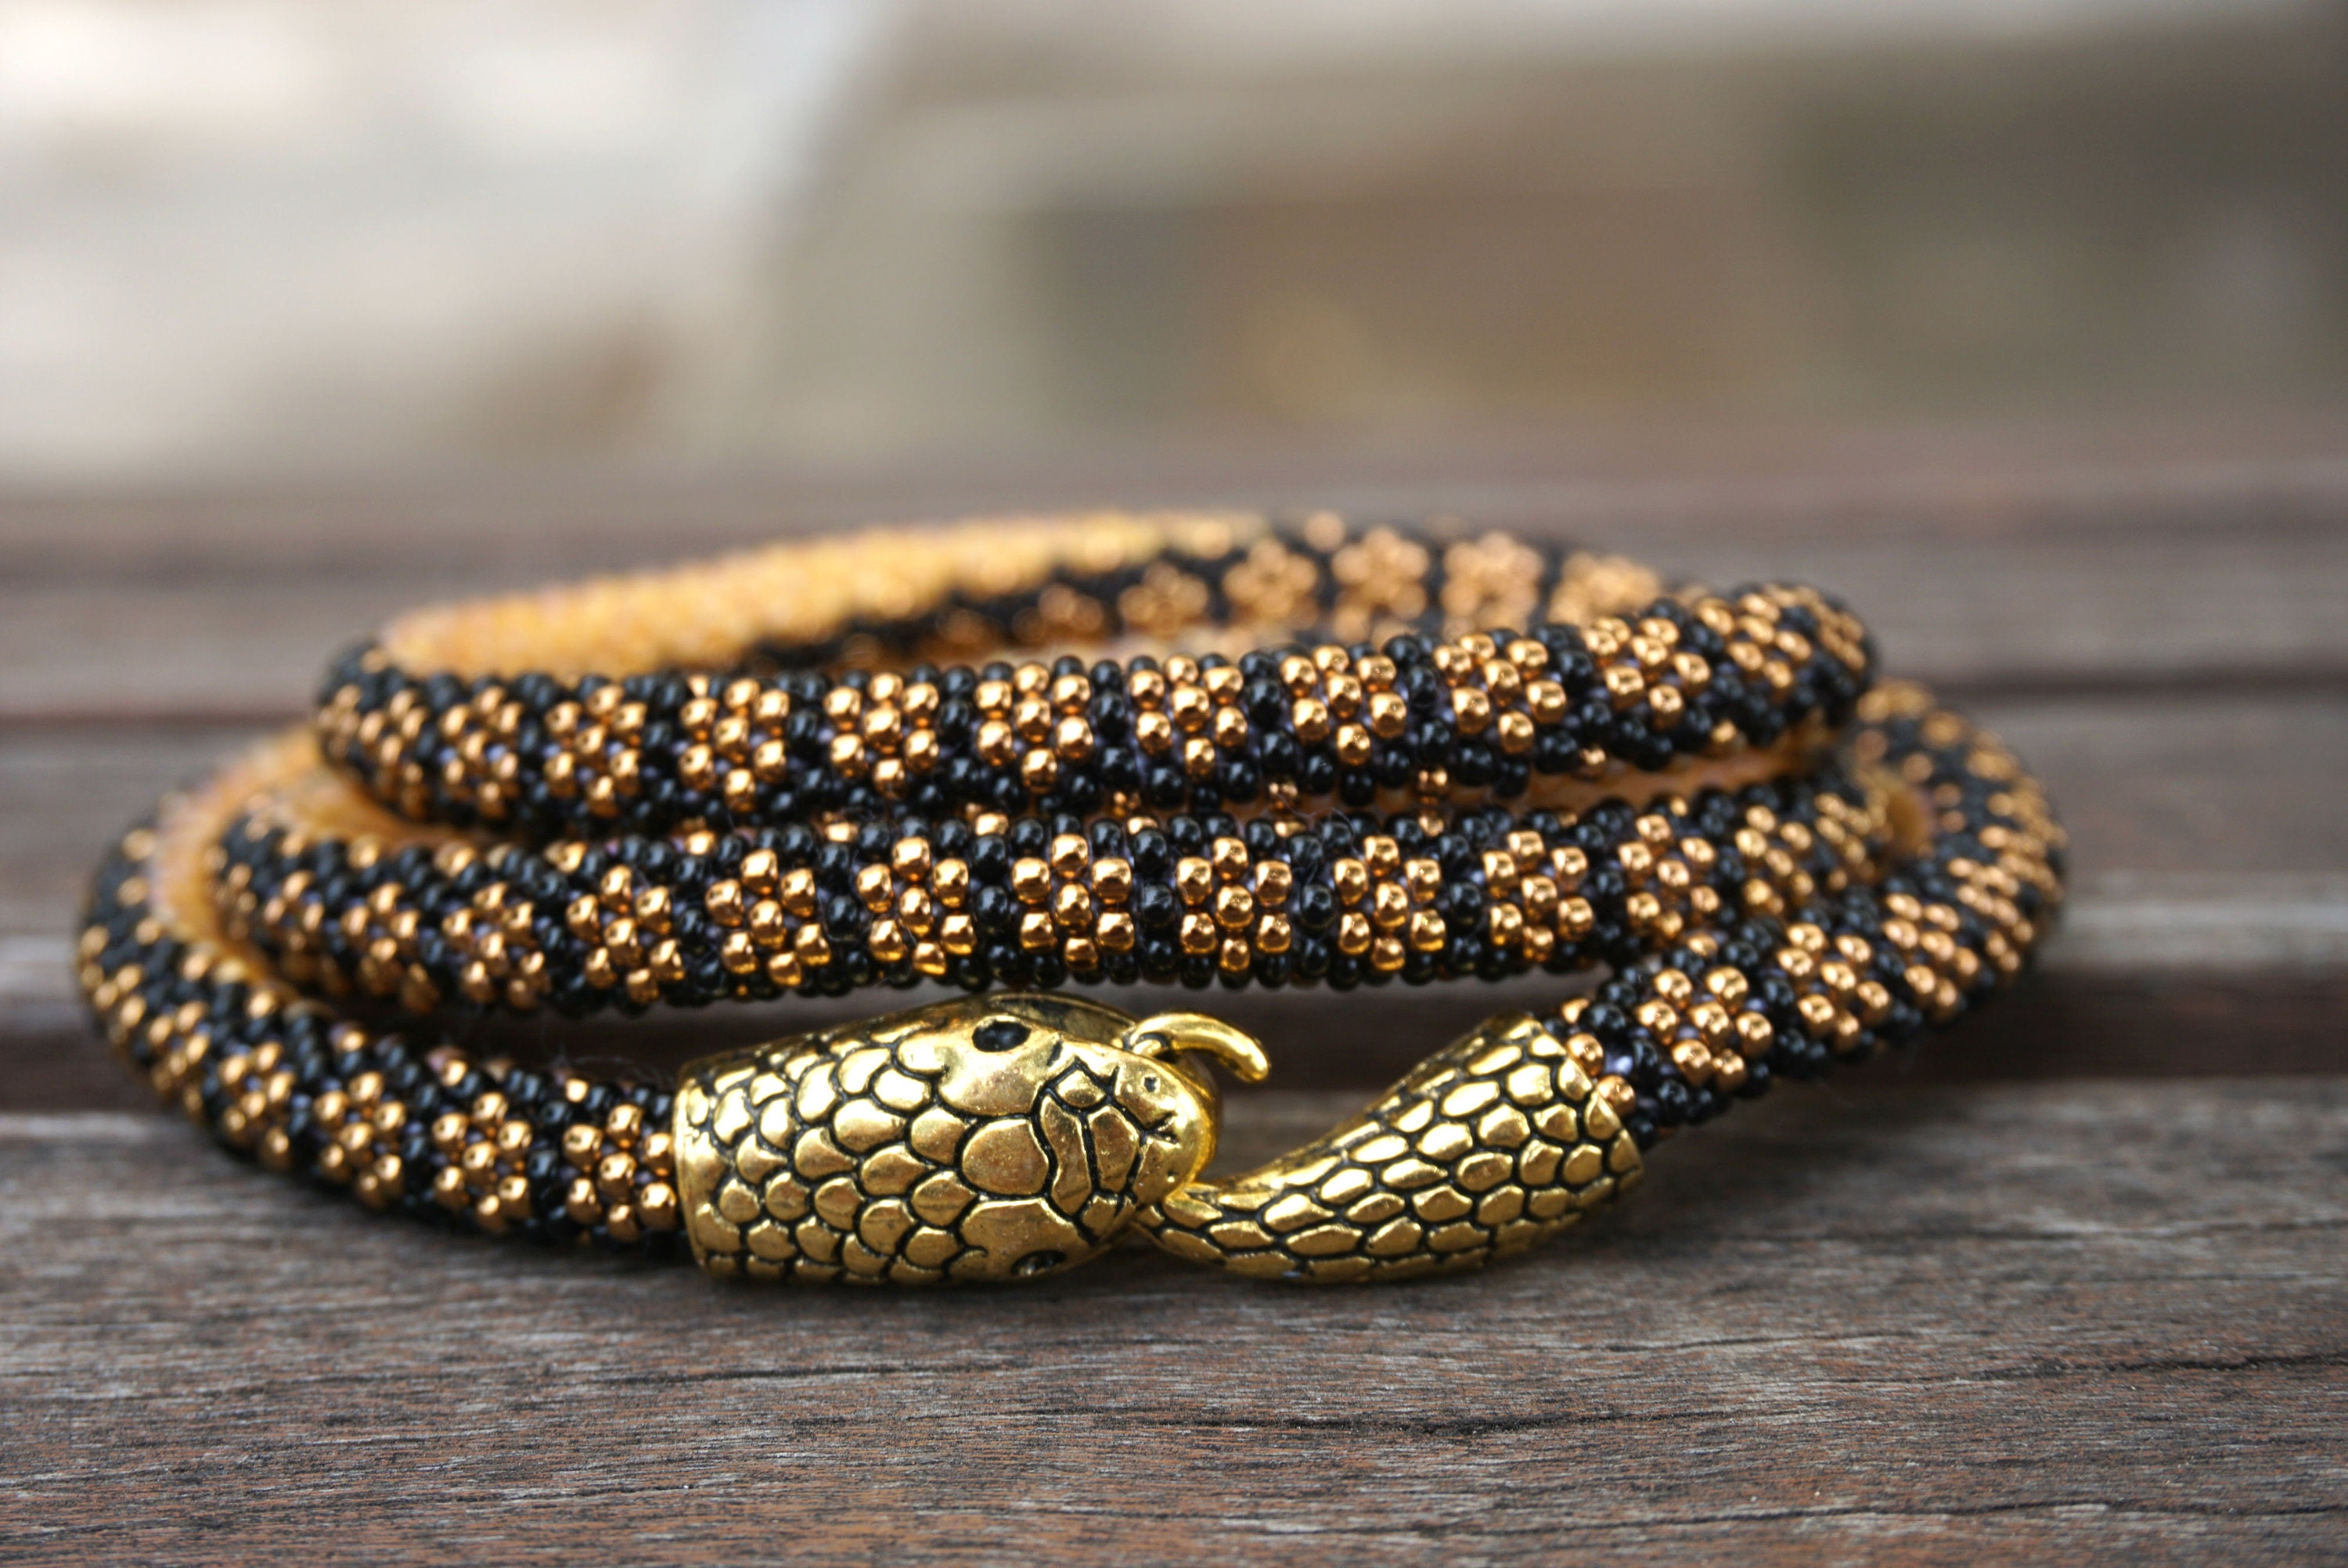 Ouroboros necklace Snake Necklace for women snake choker | Etsy